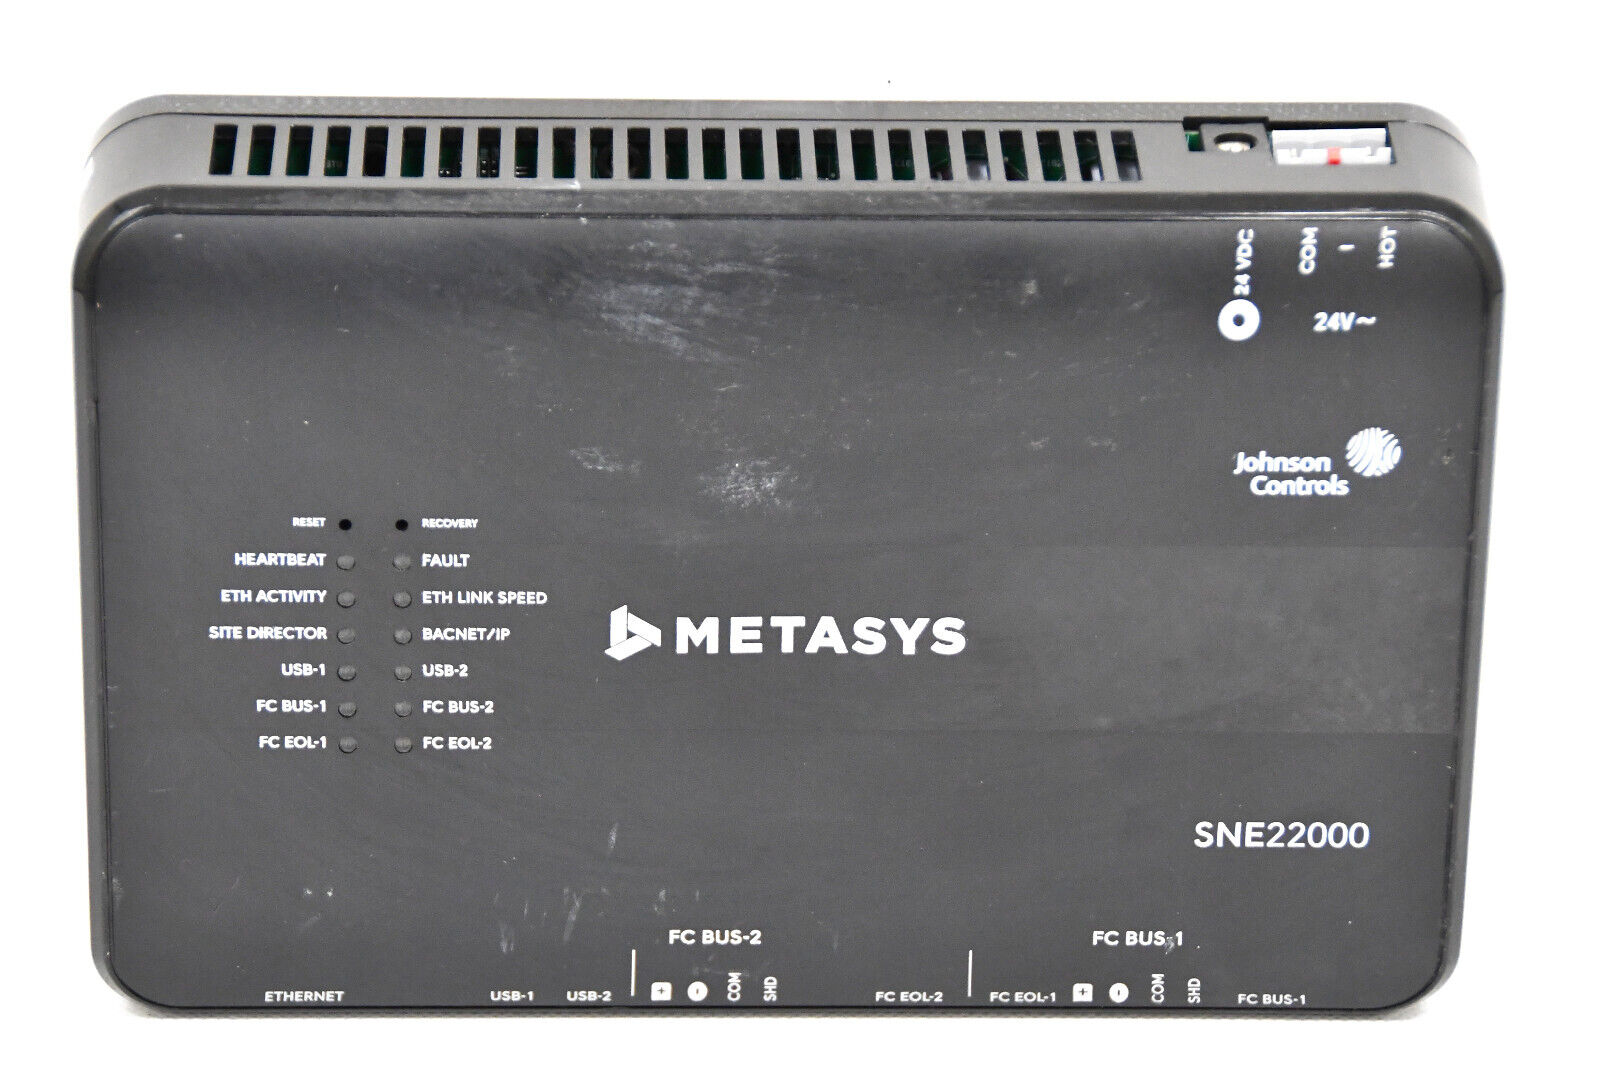 Johnson Controls Metasys SNE 22000 Controller NAE5510